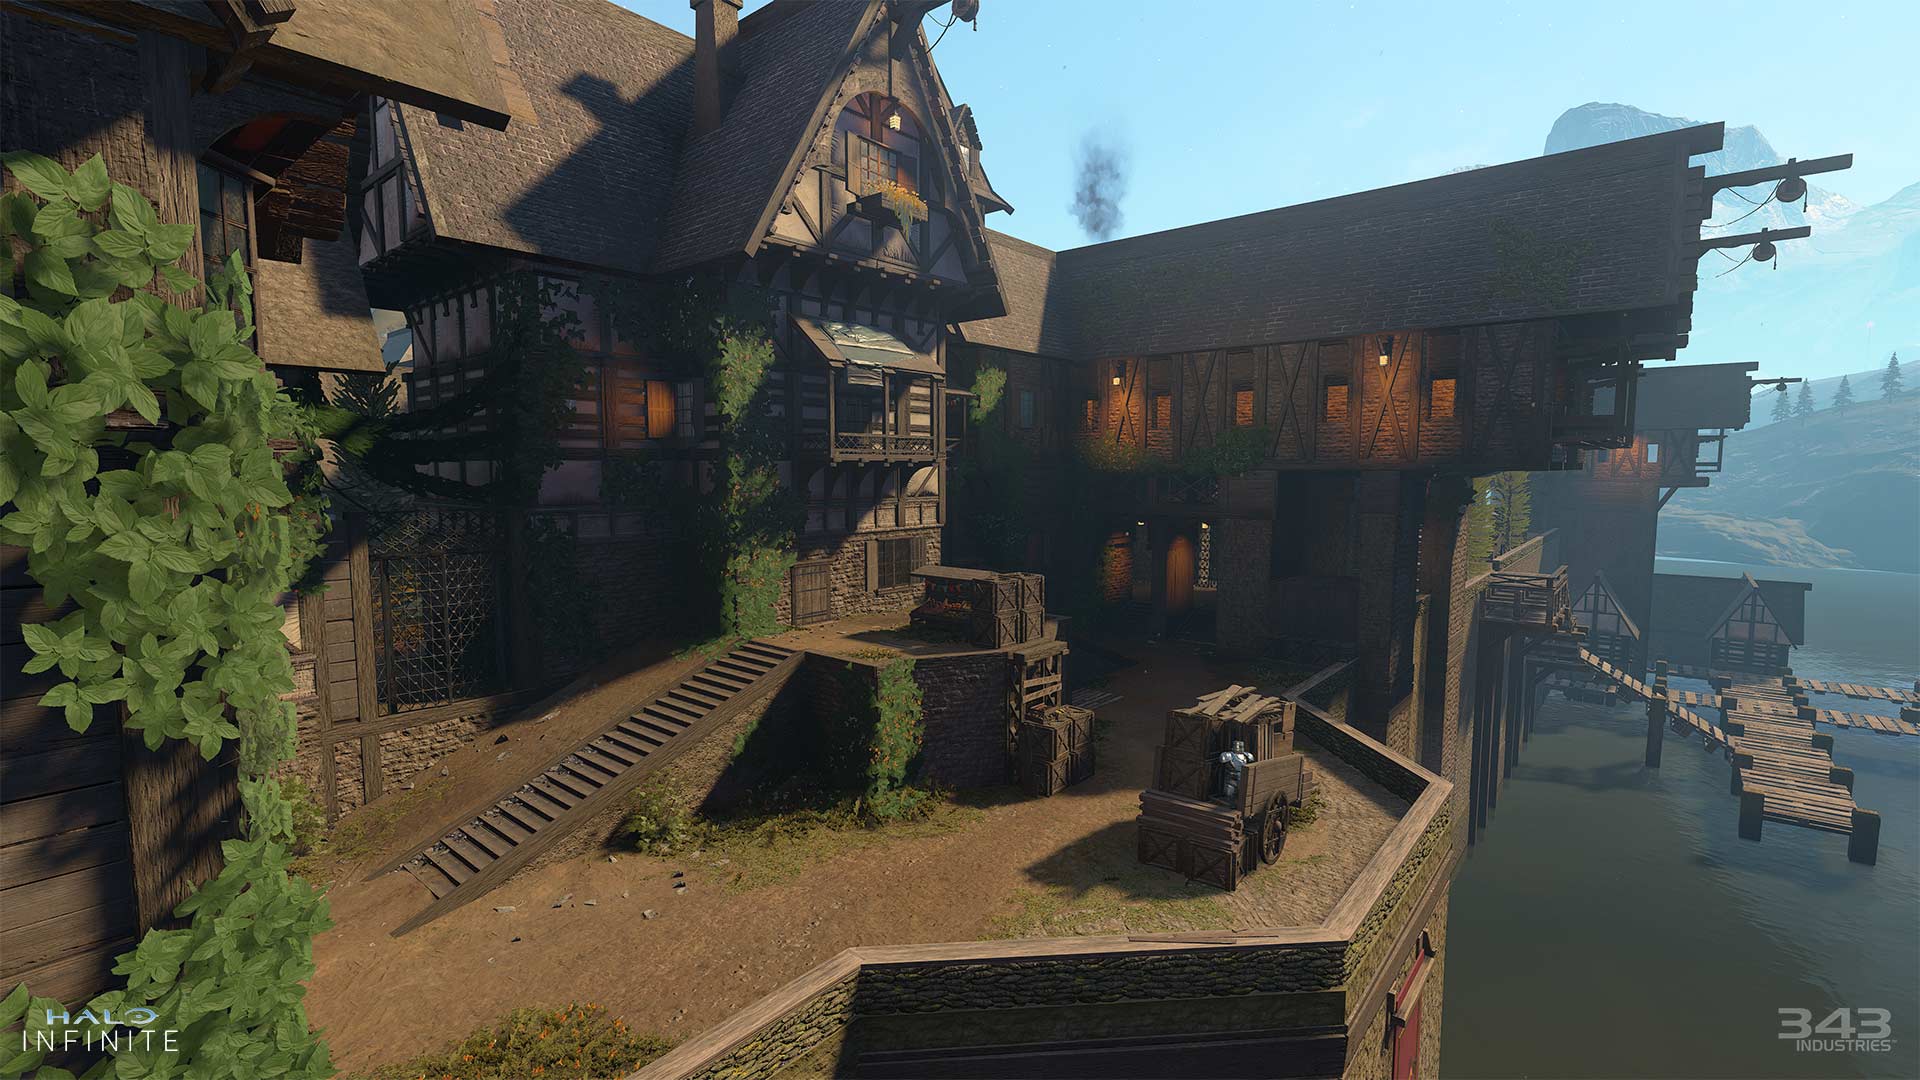 Husky Raid map "Merchant's Square" created in Halo Infinite Forge.